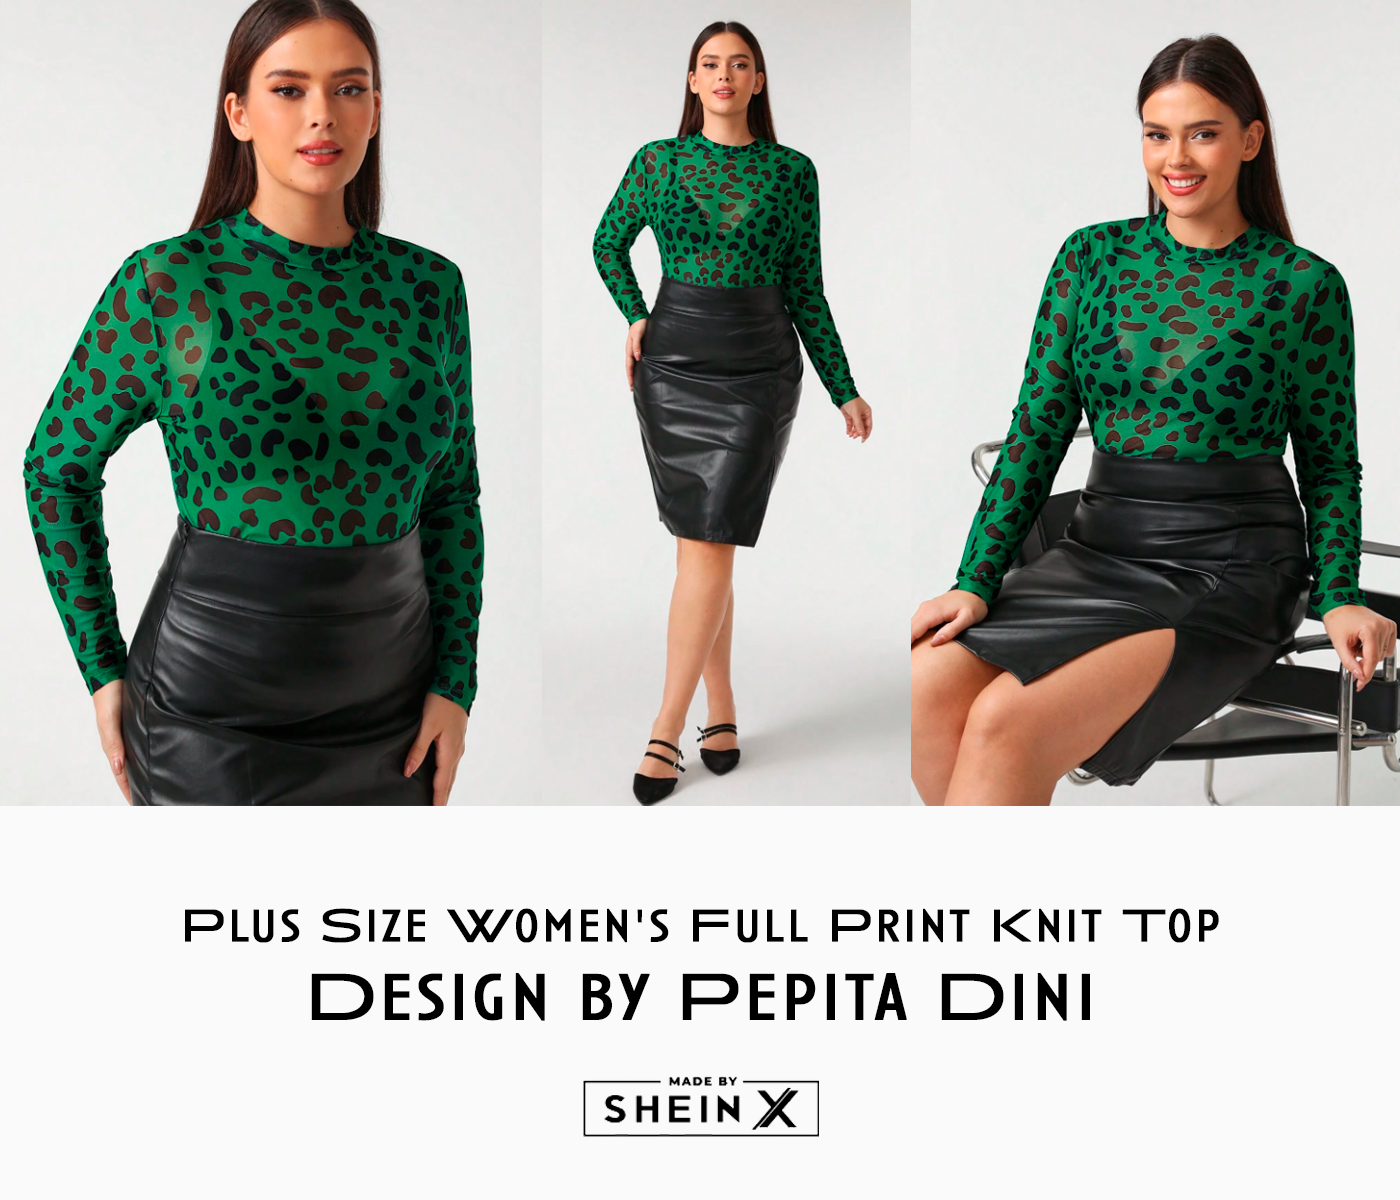 textile pattern design  seamless Animal Print Estampa rapport leopard cheetah Shein X Fashion 